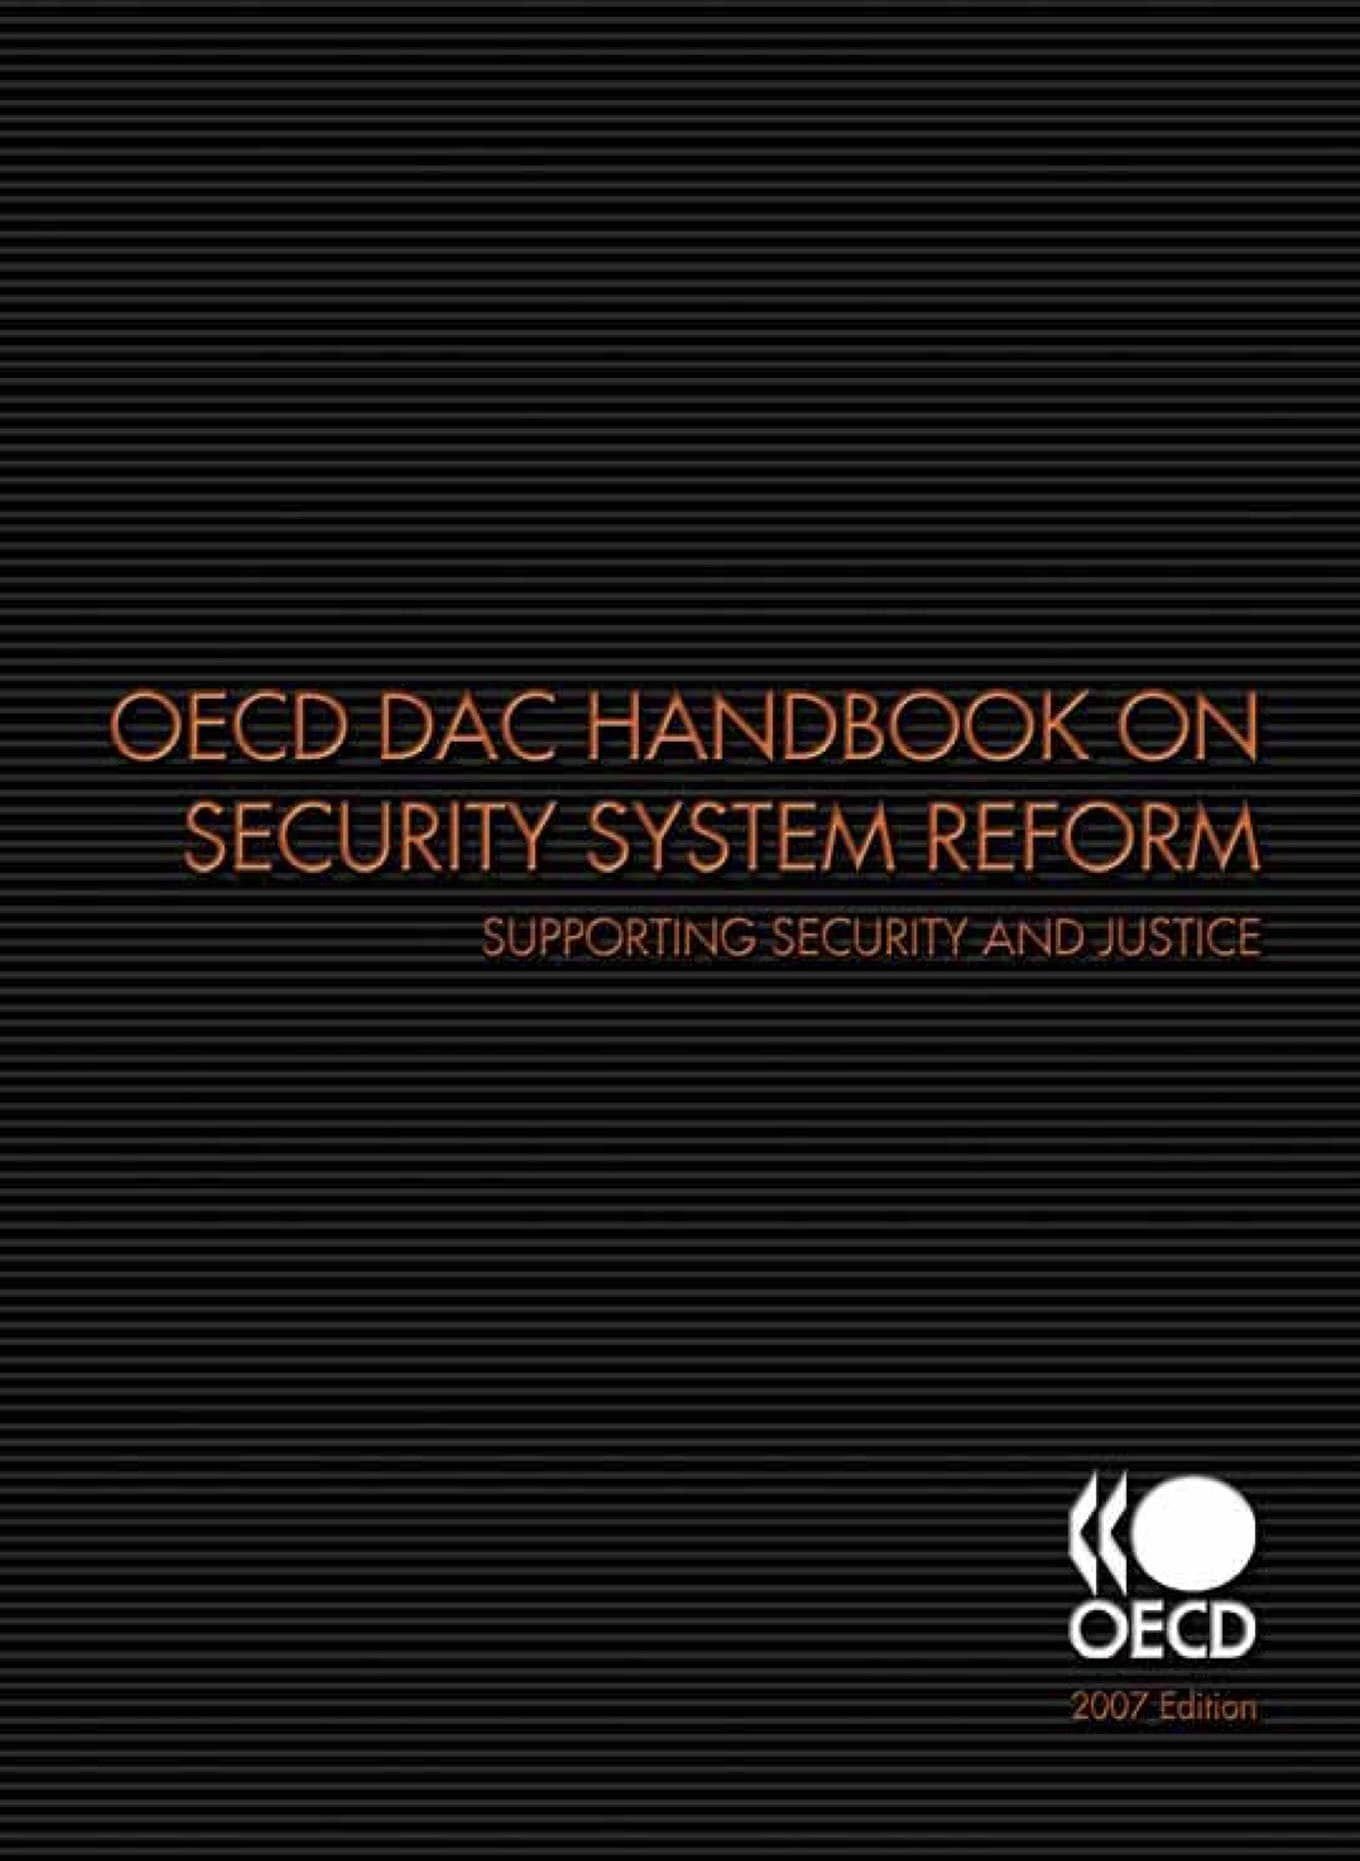 OECD DAC Handbook on Security System Reform (2007)